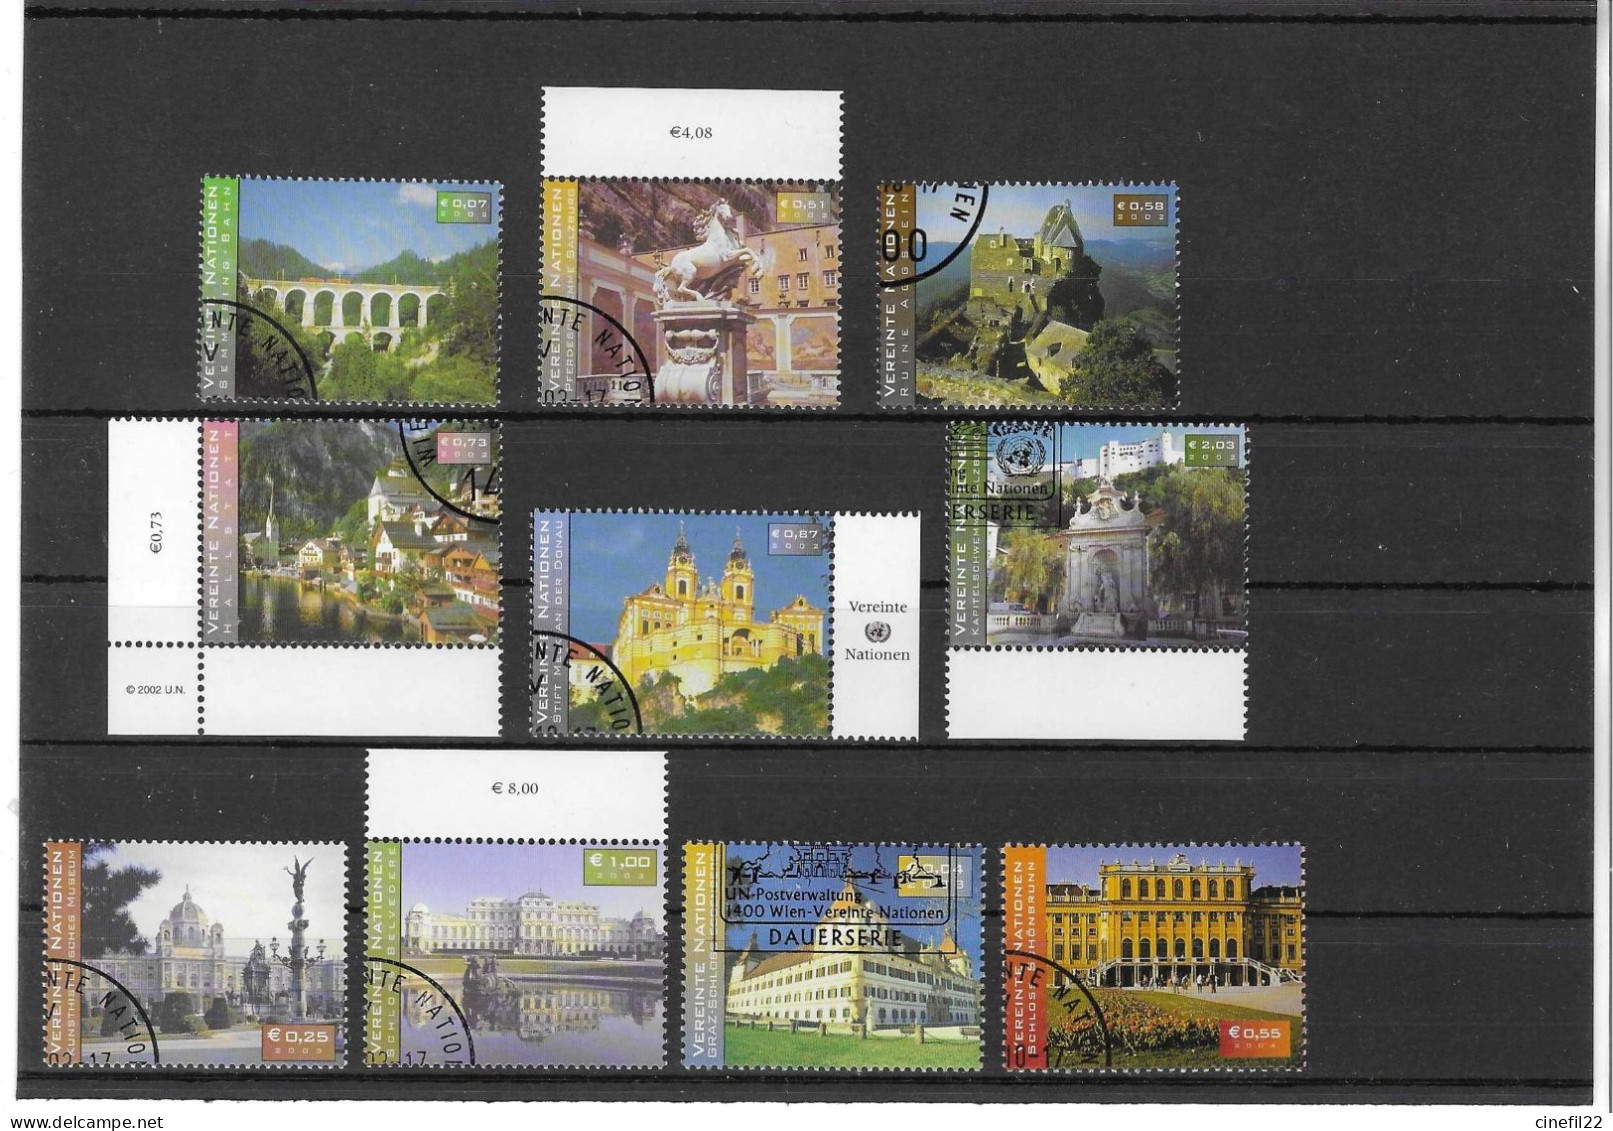 ONU, Nations-Unies, Vienne, Série Courante 2002/2003, Yv. 364/69 + 399/00 + 407 + 422 Oblitérés - Used Stamps